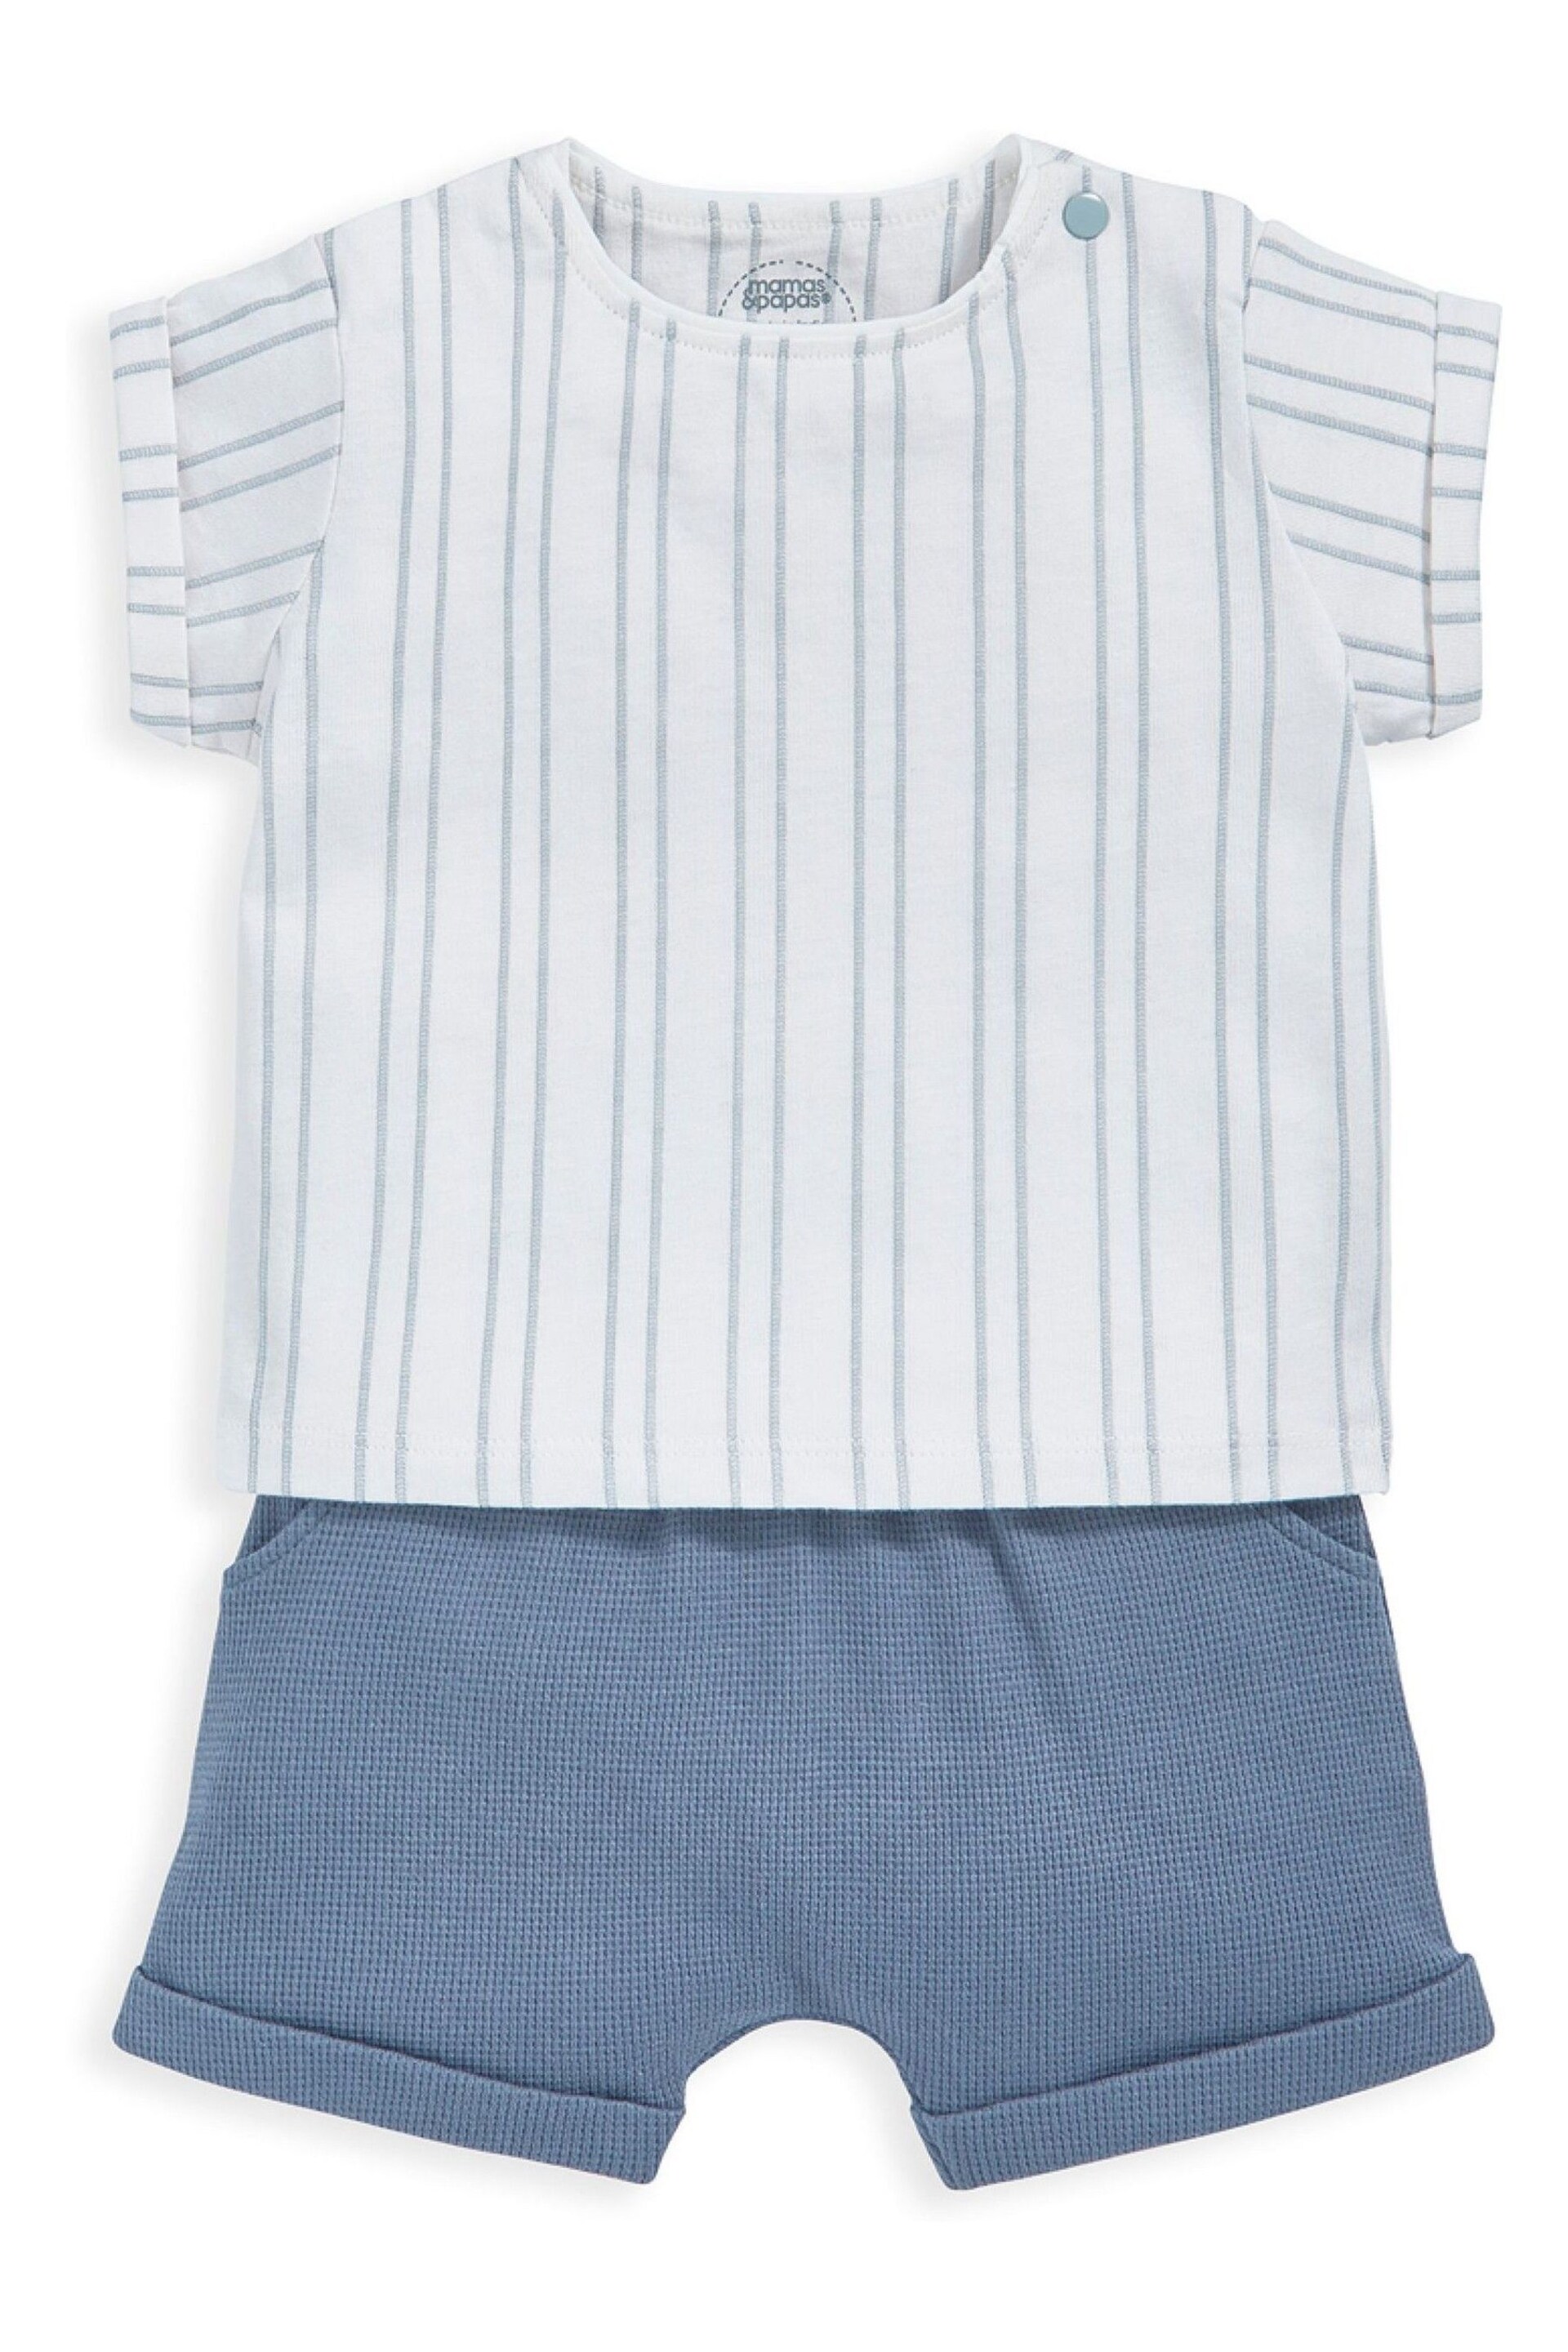 Mamas & Papas Blue Stripe T-Shirt And Shorts Set 2 Piece - Image 2 of 4